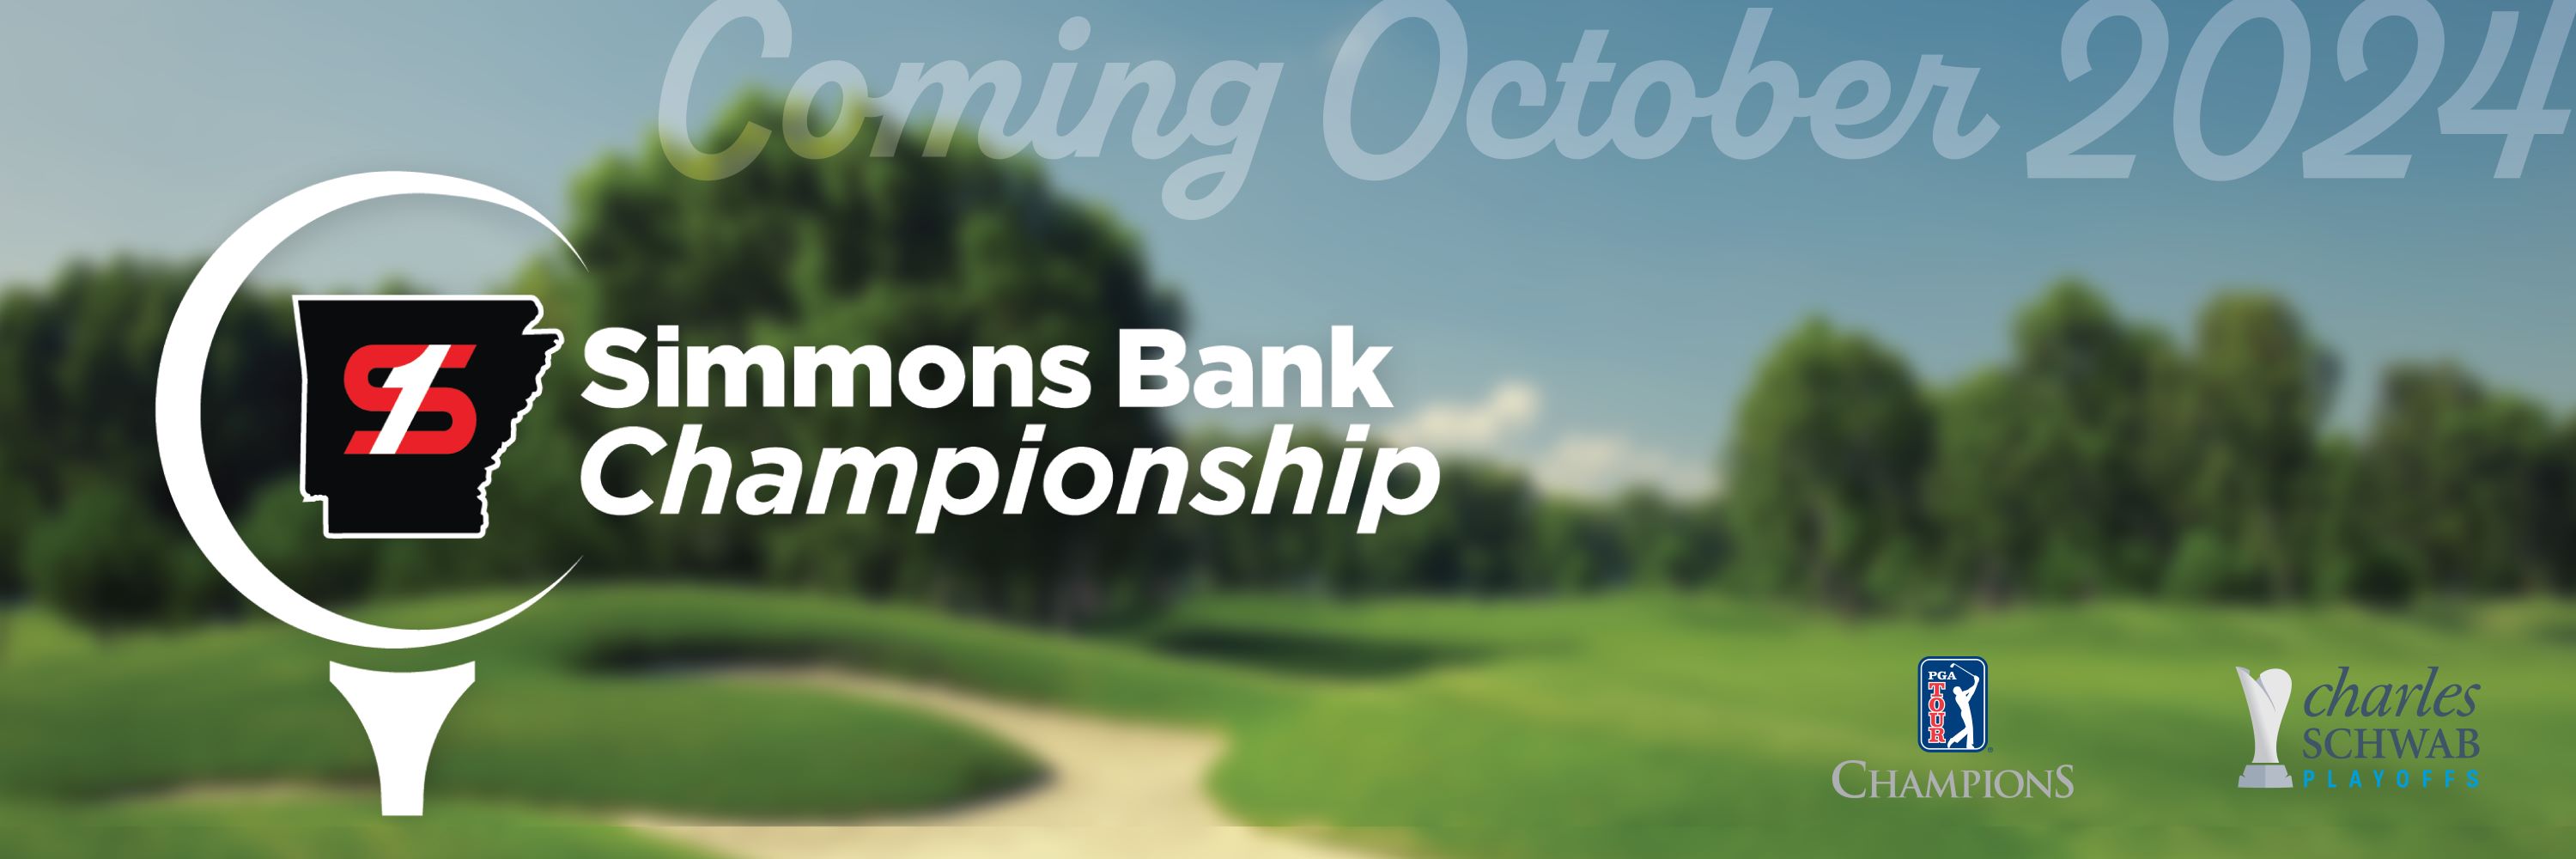 Simmons Bank Championship coming soon.jpg